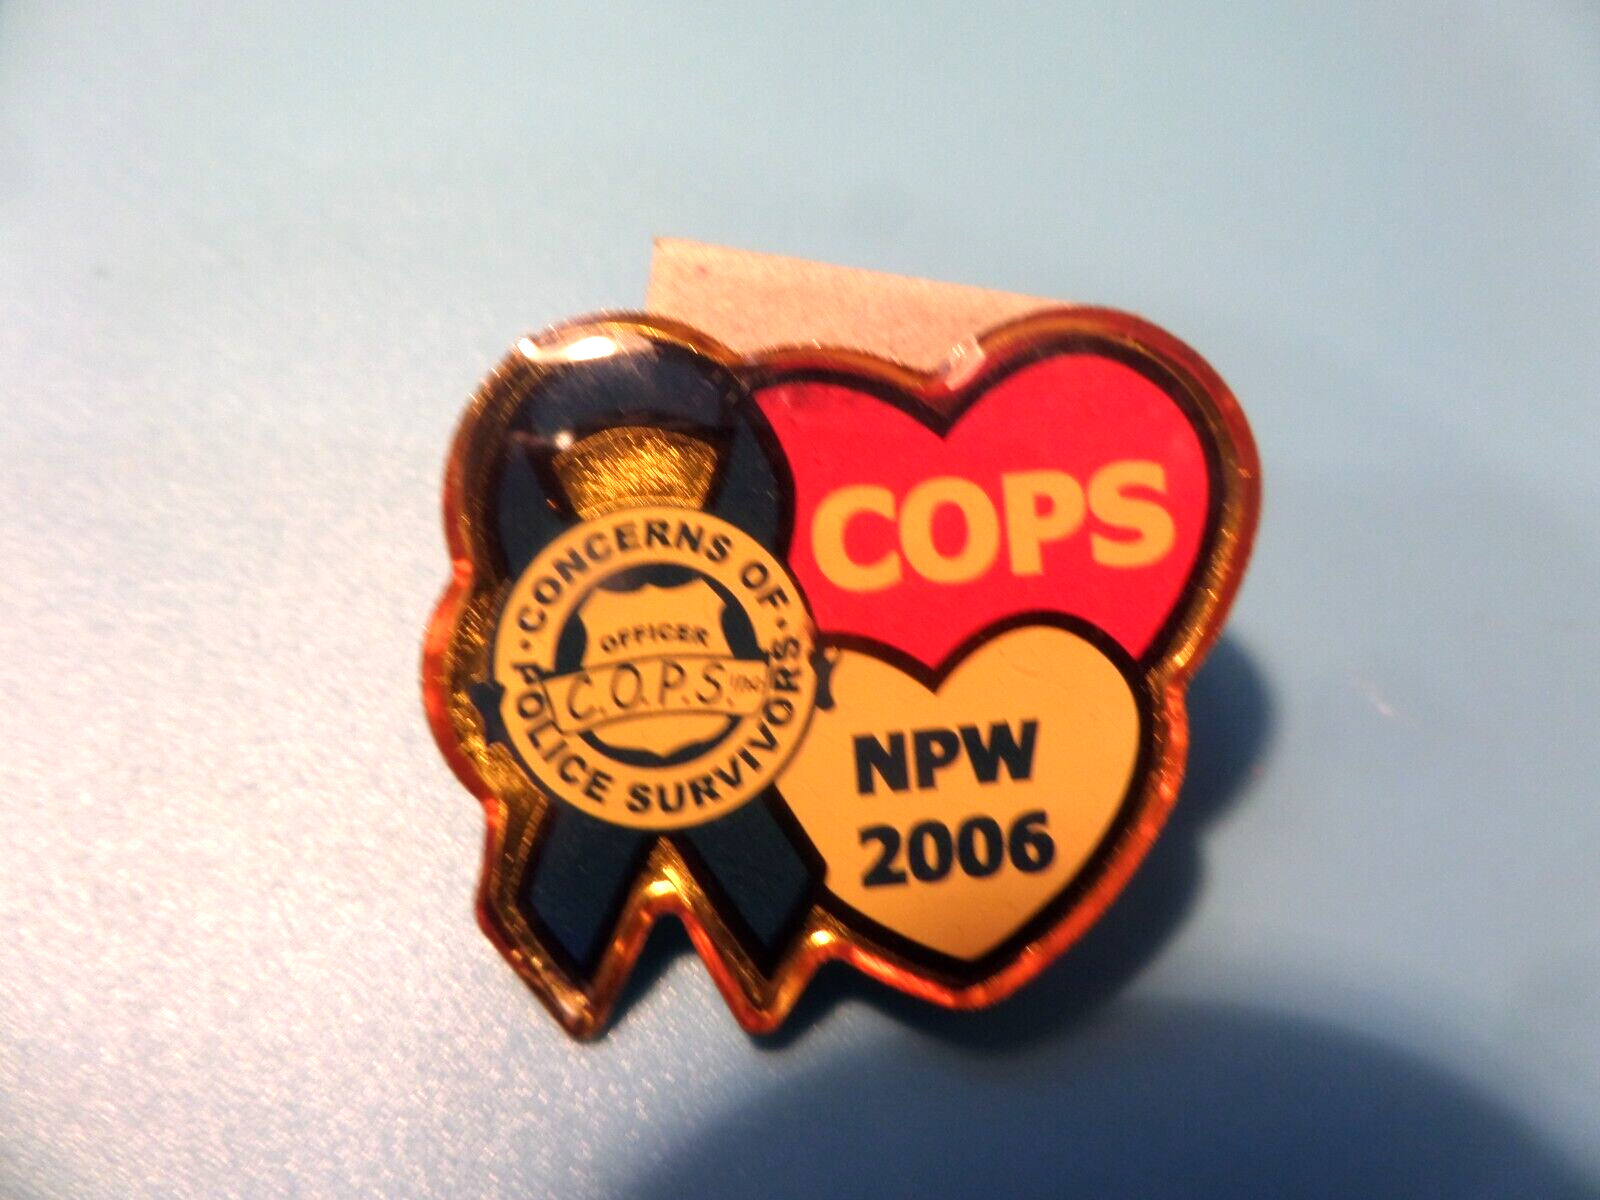 New 2006 C.O.P.S. ENAMELED PIN NPW POLICE SURVIVORS